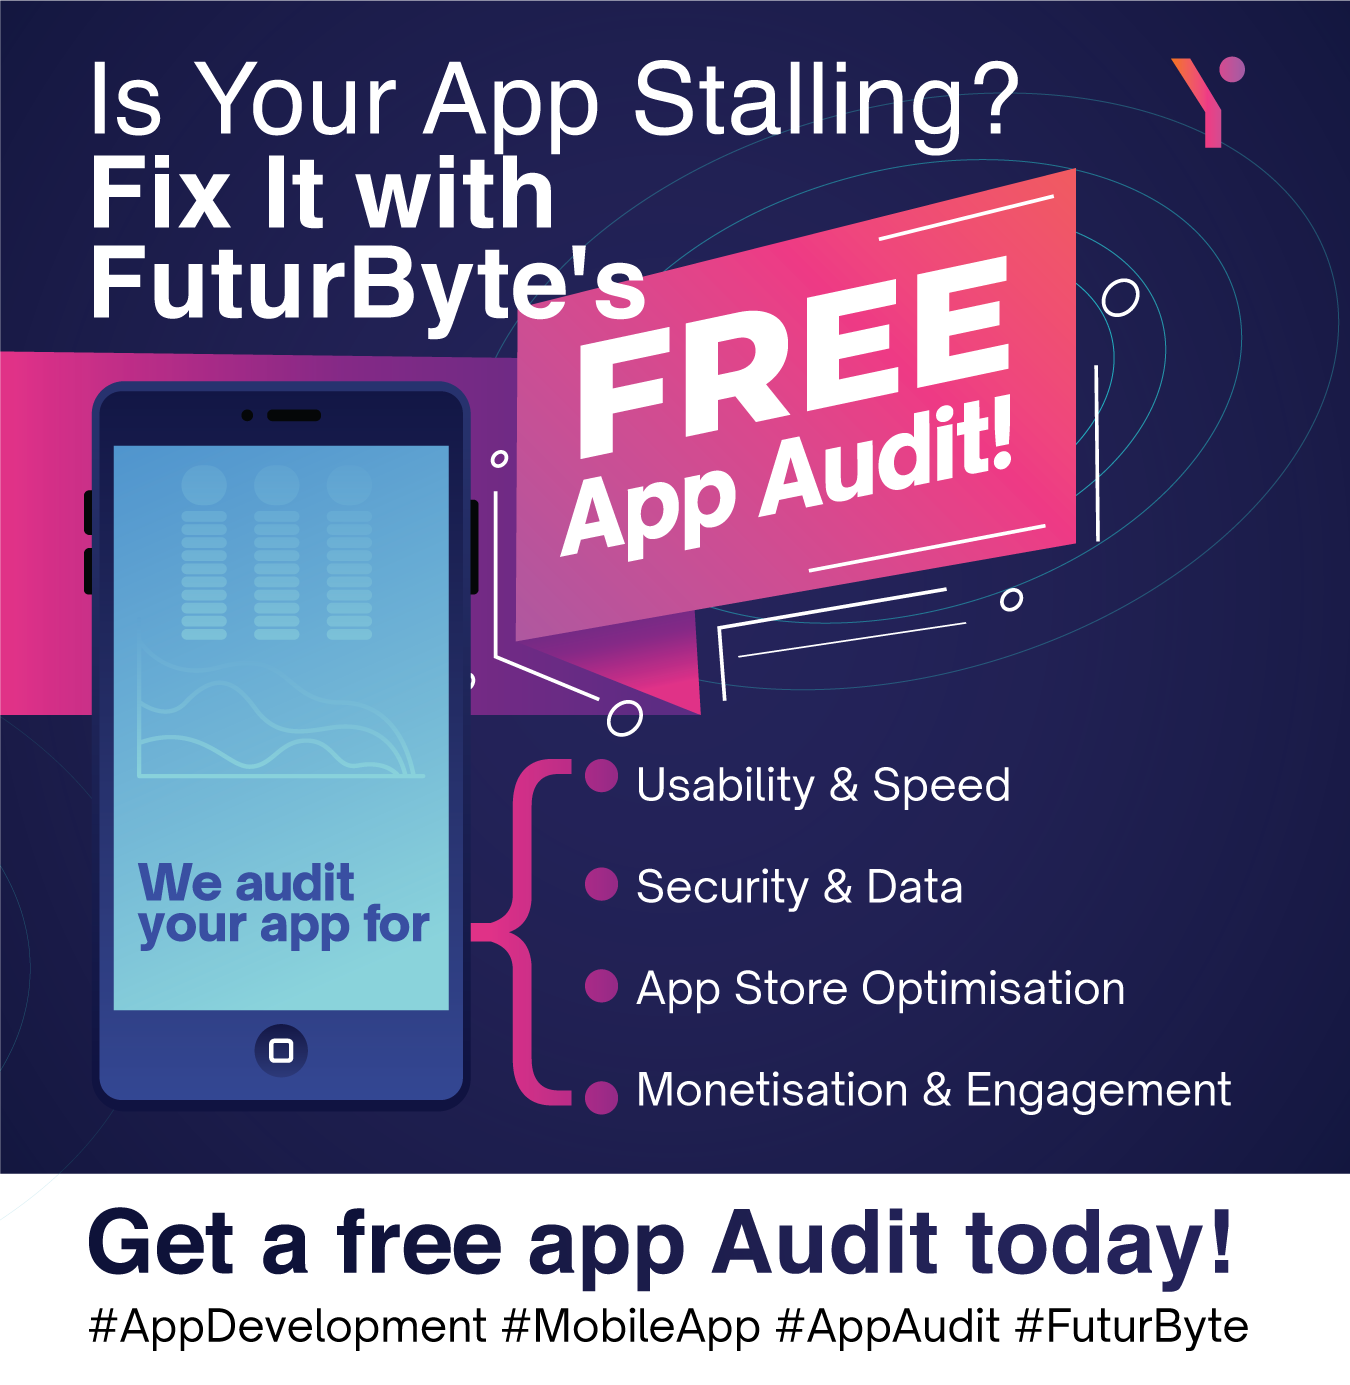 Get FuturByte's free app audit